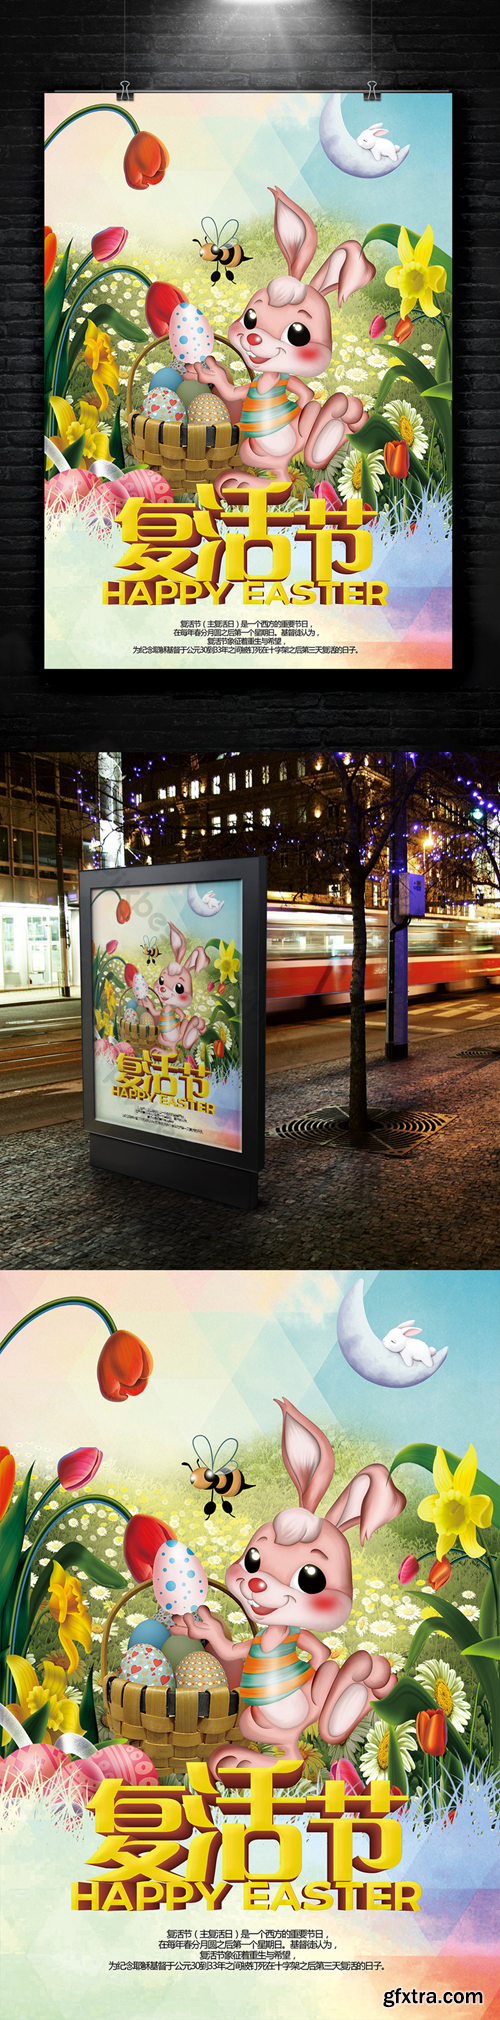 Easter egg rabbit promotion poster Template PSD